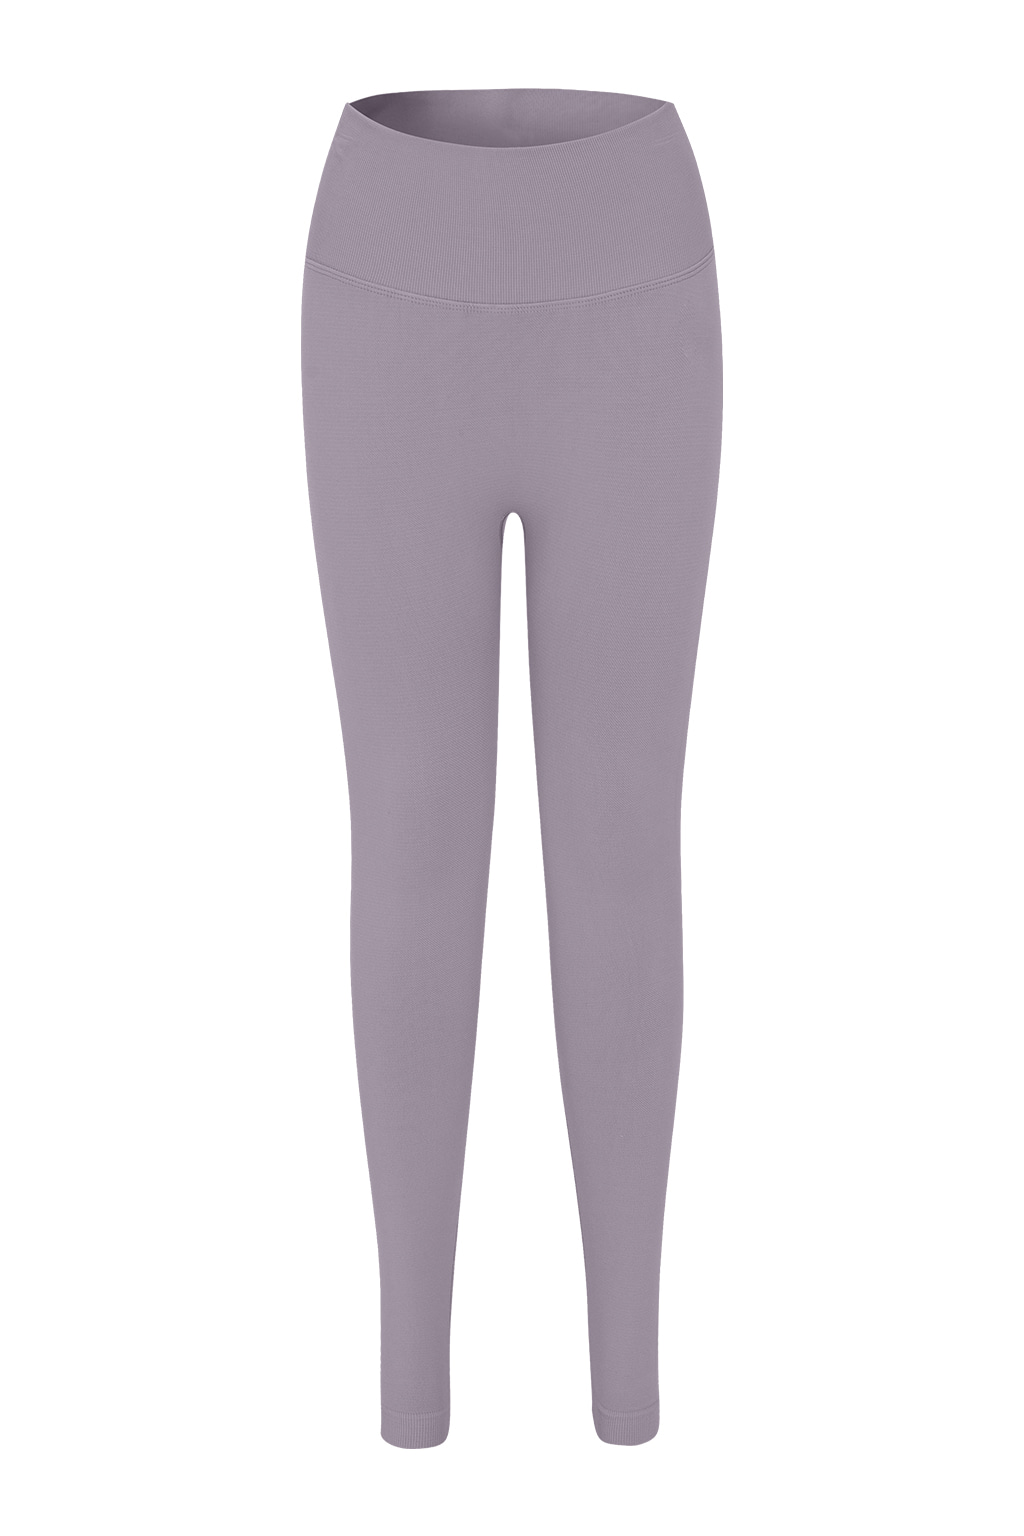 All Day Leggings Purple Gray